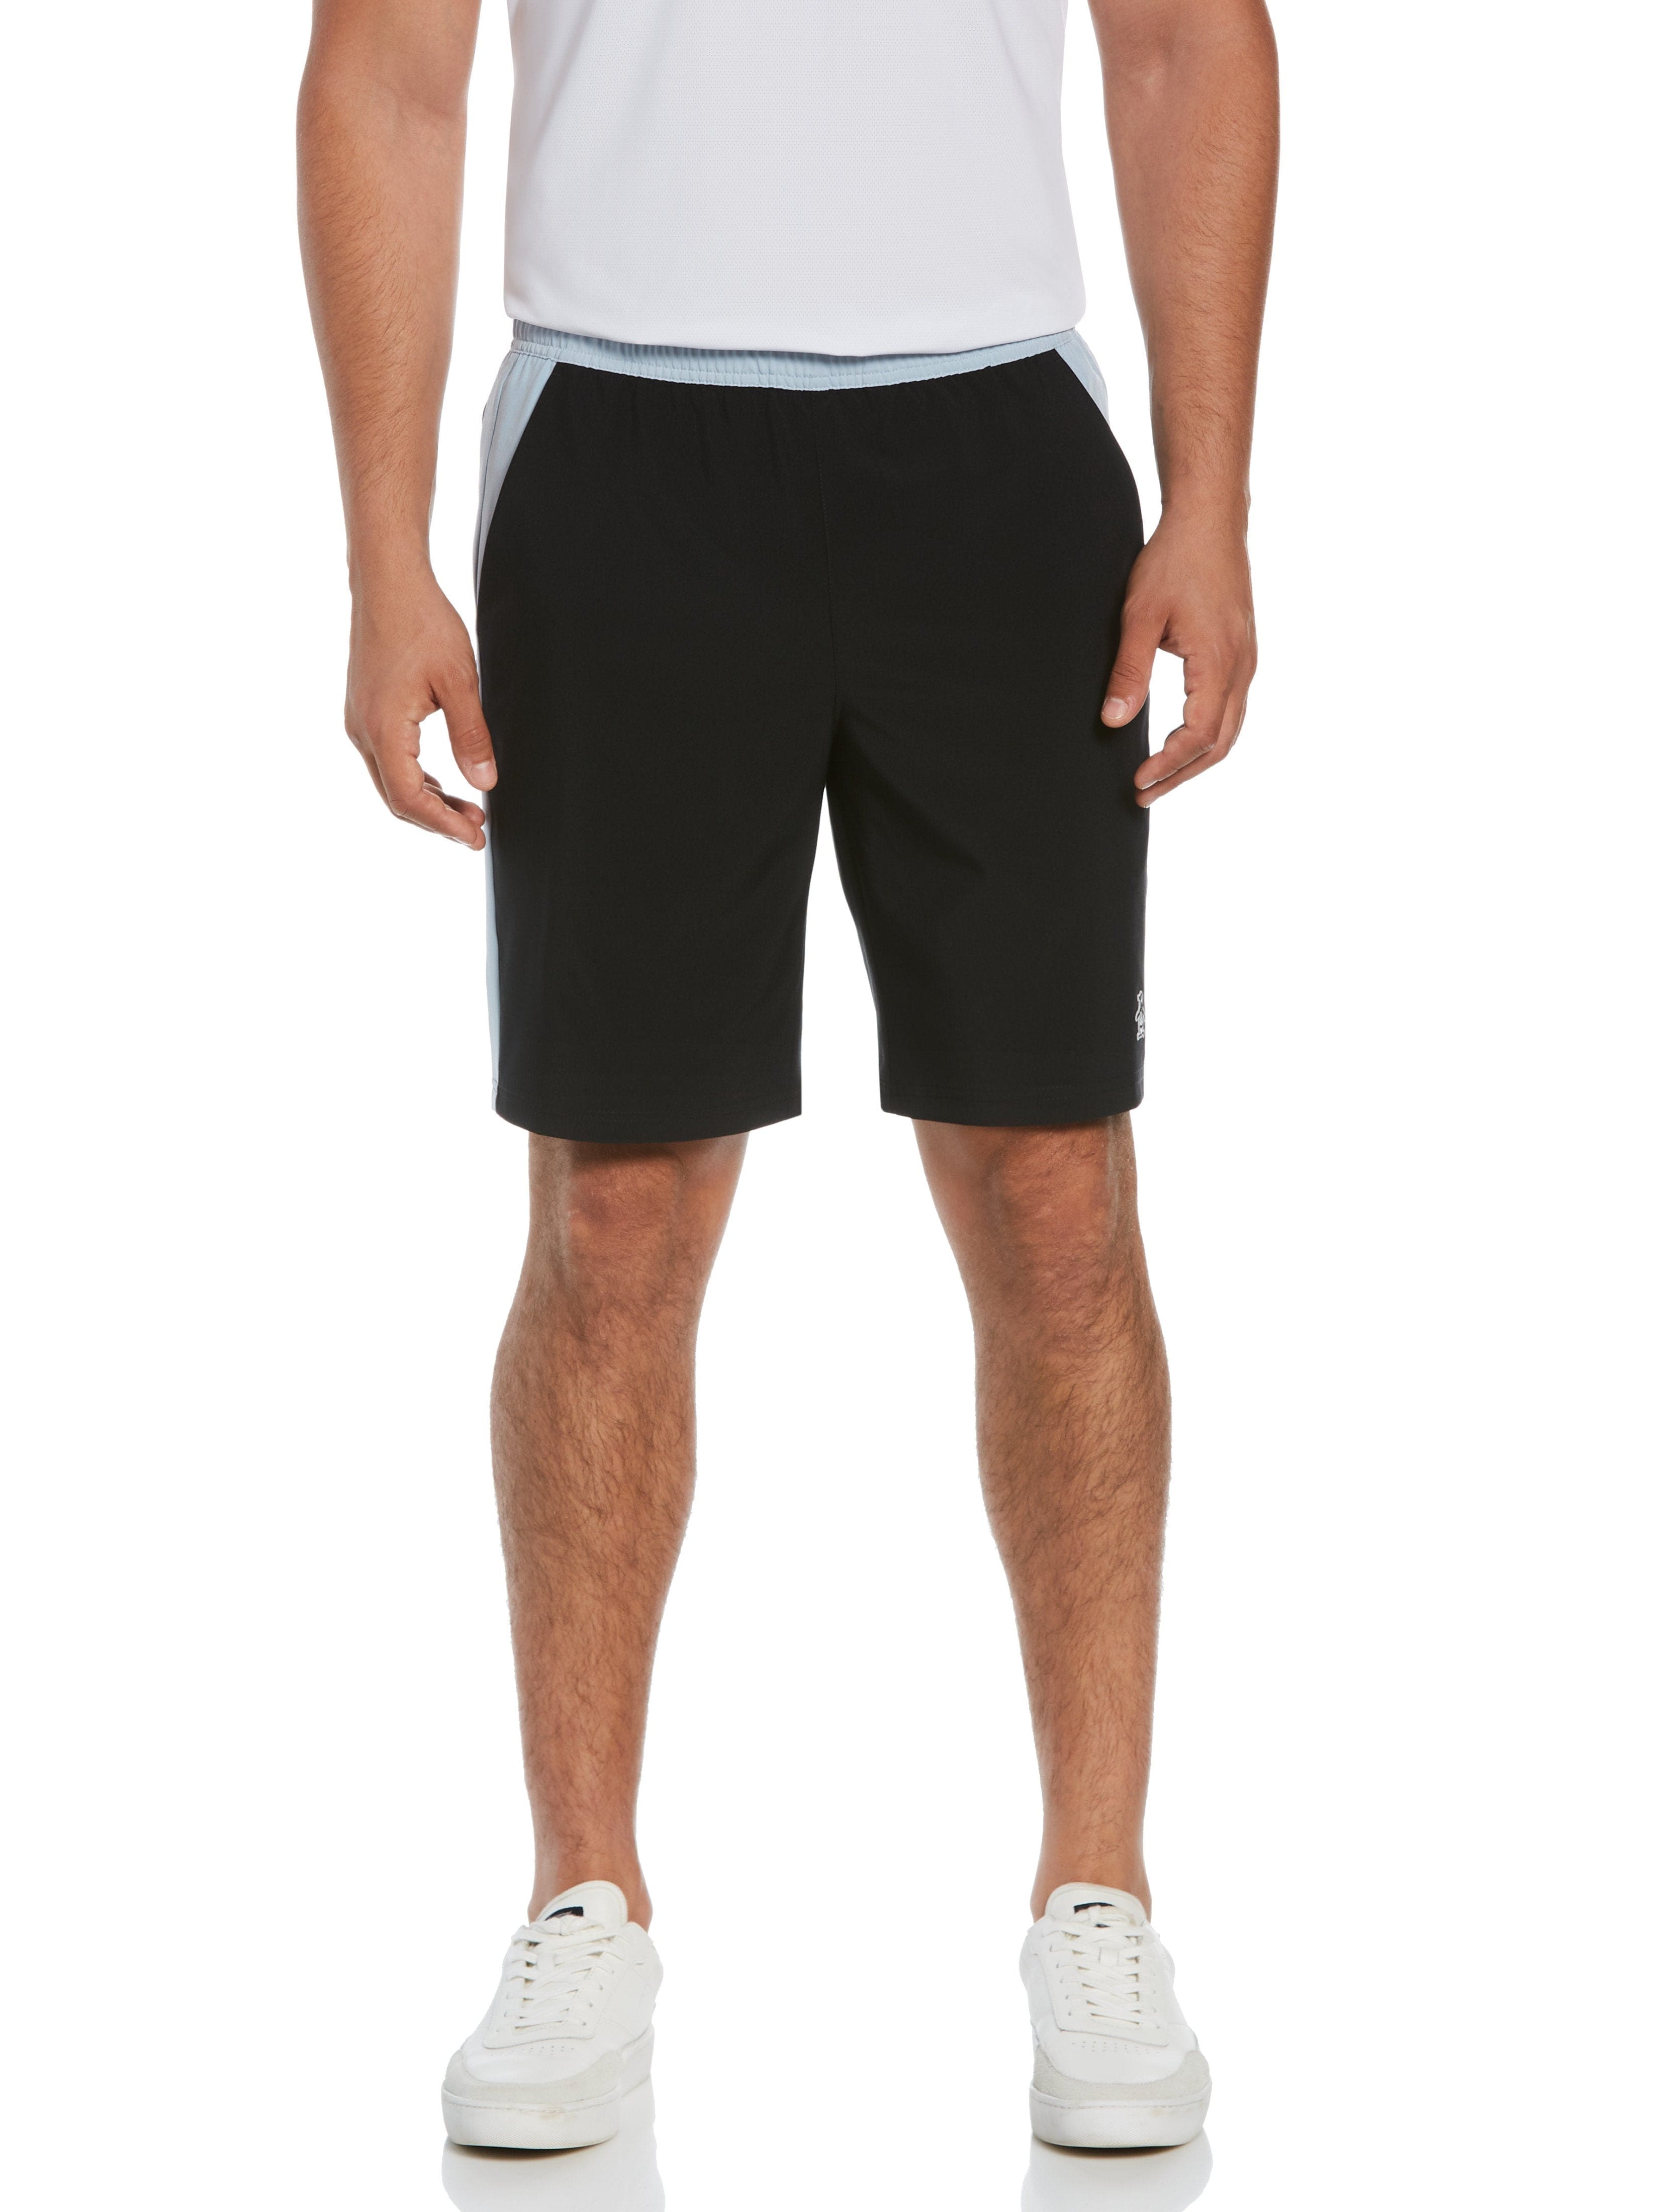 Original Penguin Mens 4-Way Stretch Color Block Shorts, Size XL, Black, Polyester/Spandex | Golf Apparel Shop